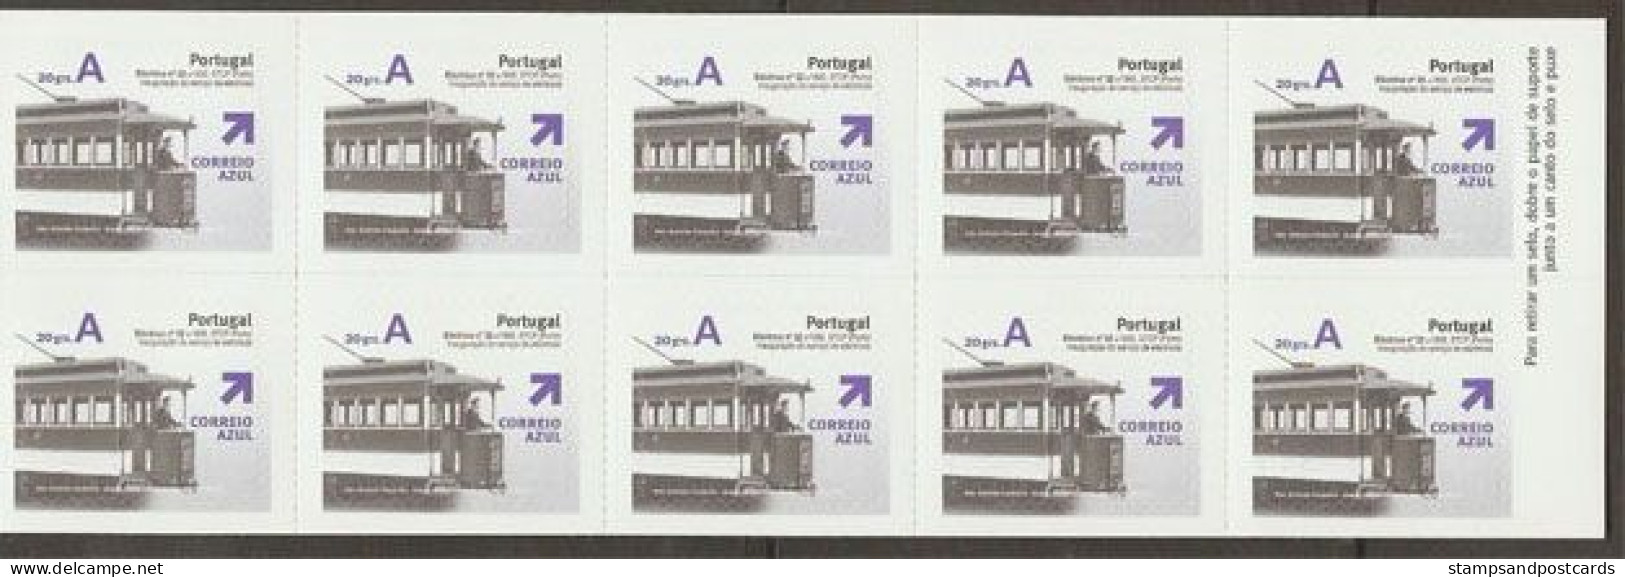 Portugal Carnet Autocollant 2007 Tram 1895 Oporto 50 Timbres 2007 Sticker Stamp Booklet Oporto Tramway 50 Stamps *** - Tranvie